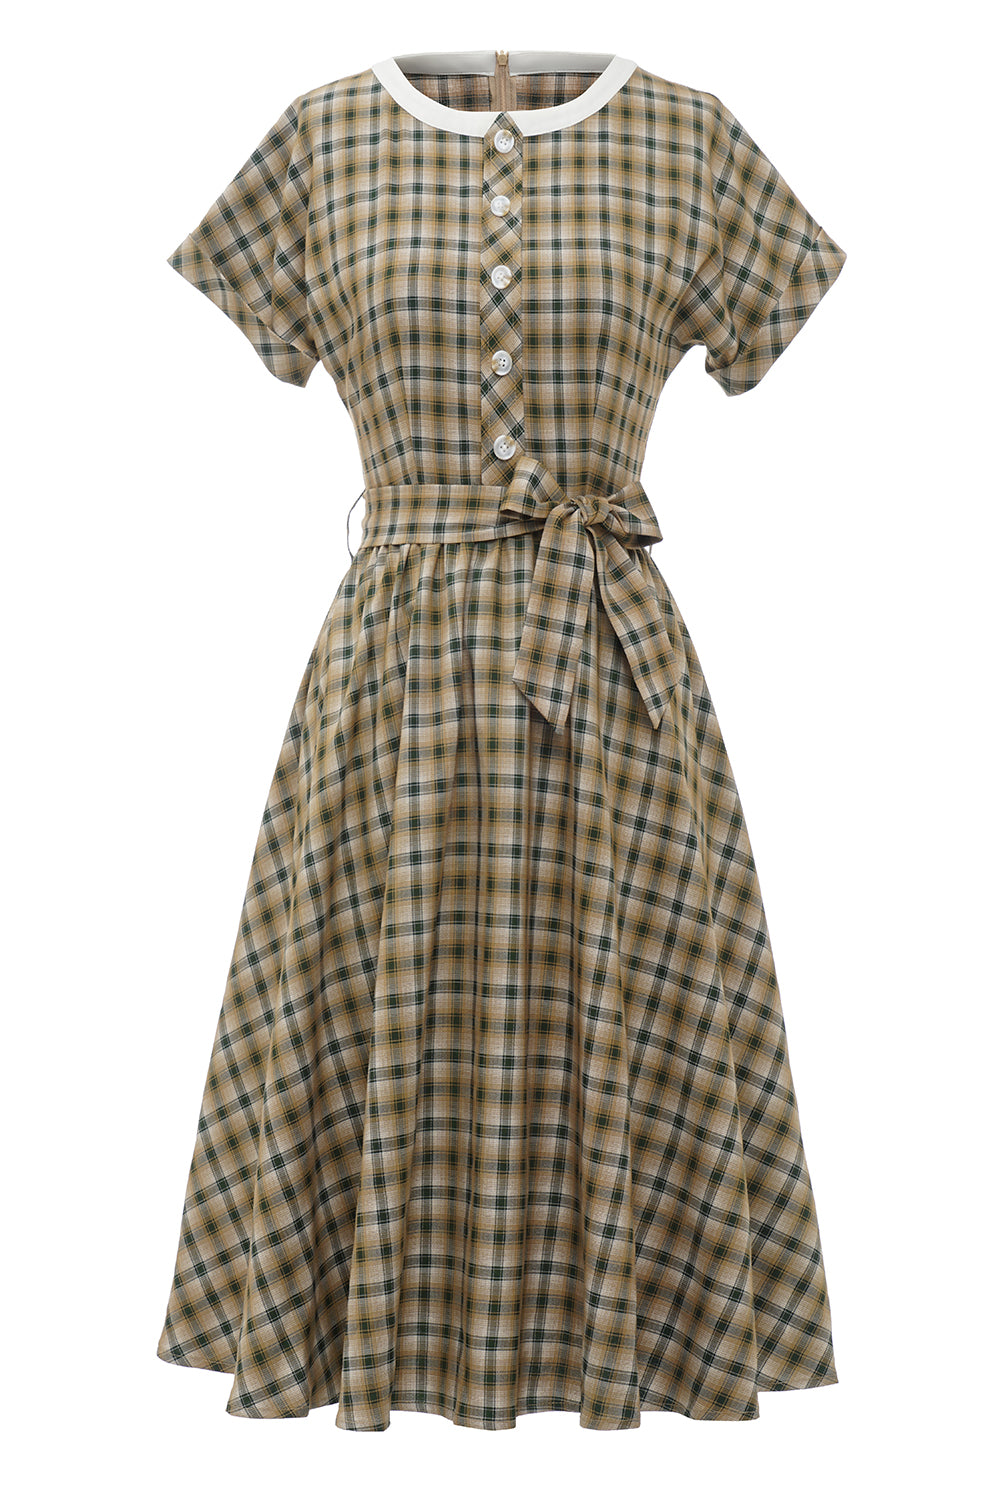 Khaki Green Grid Short Sleeves 1950s Vintage Dress